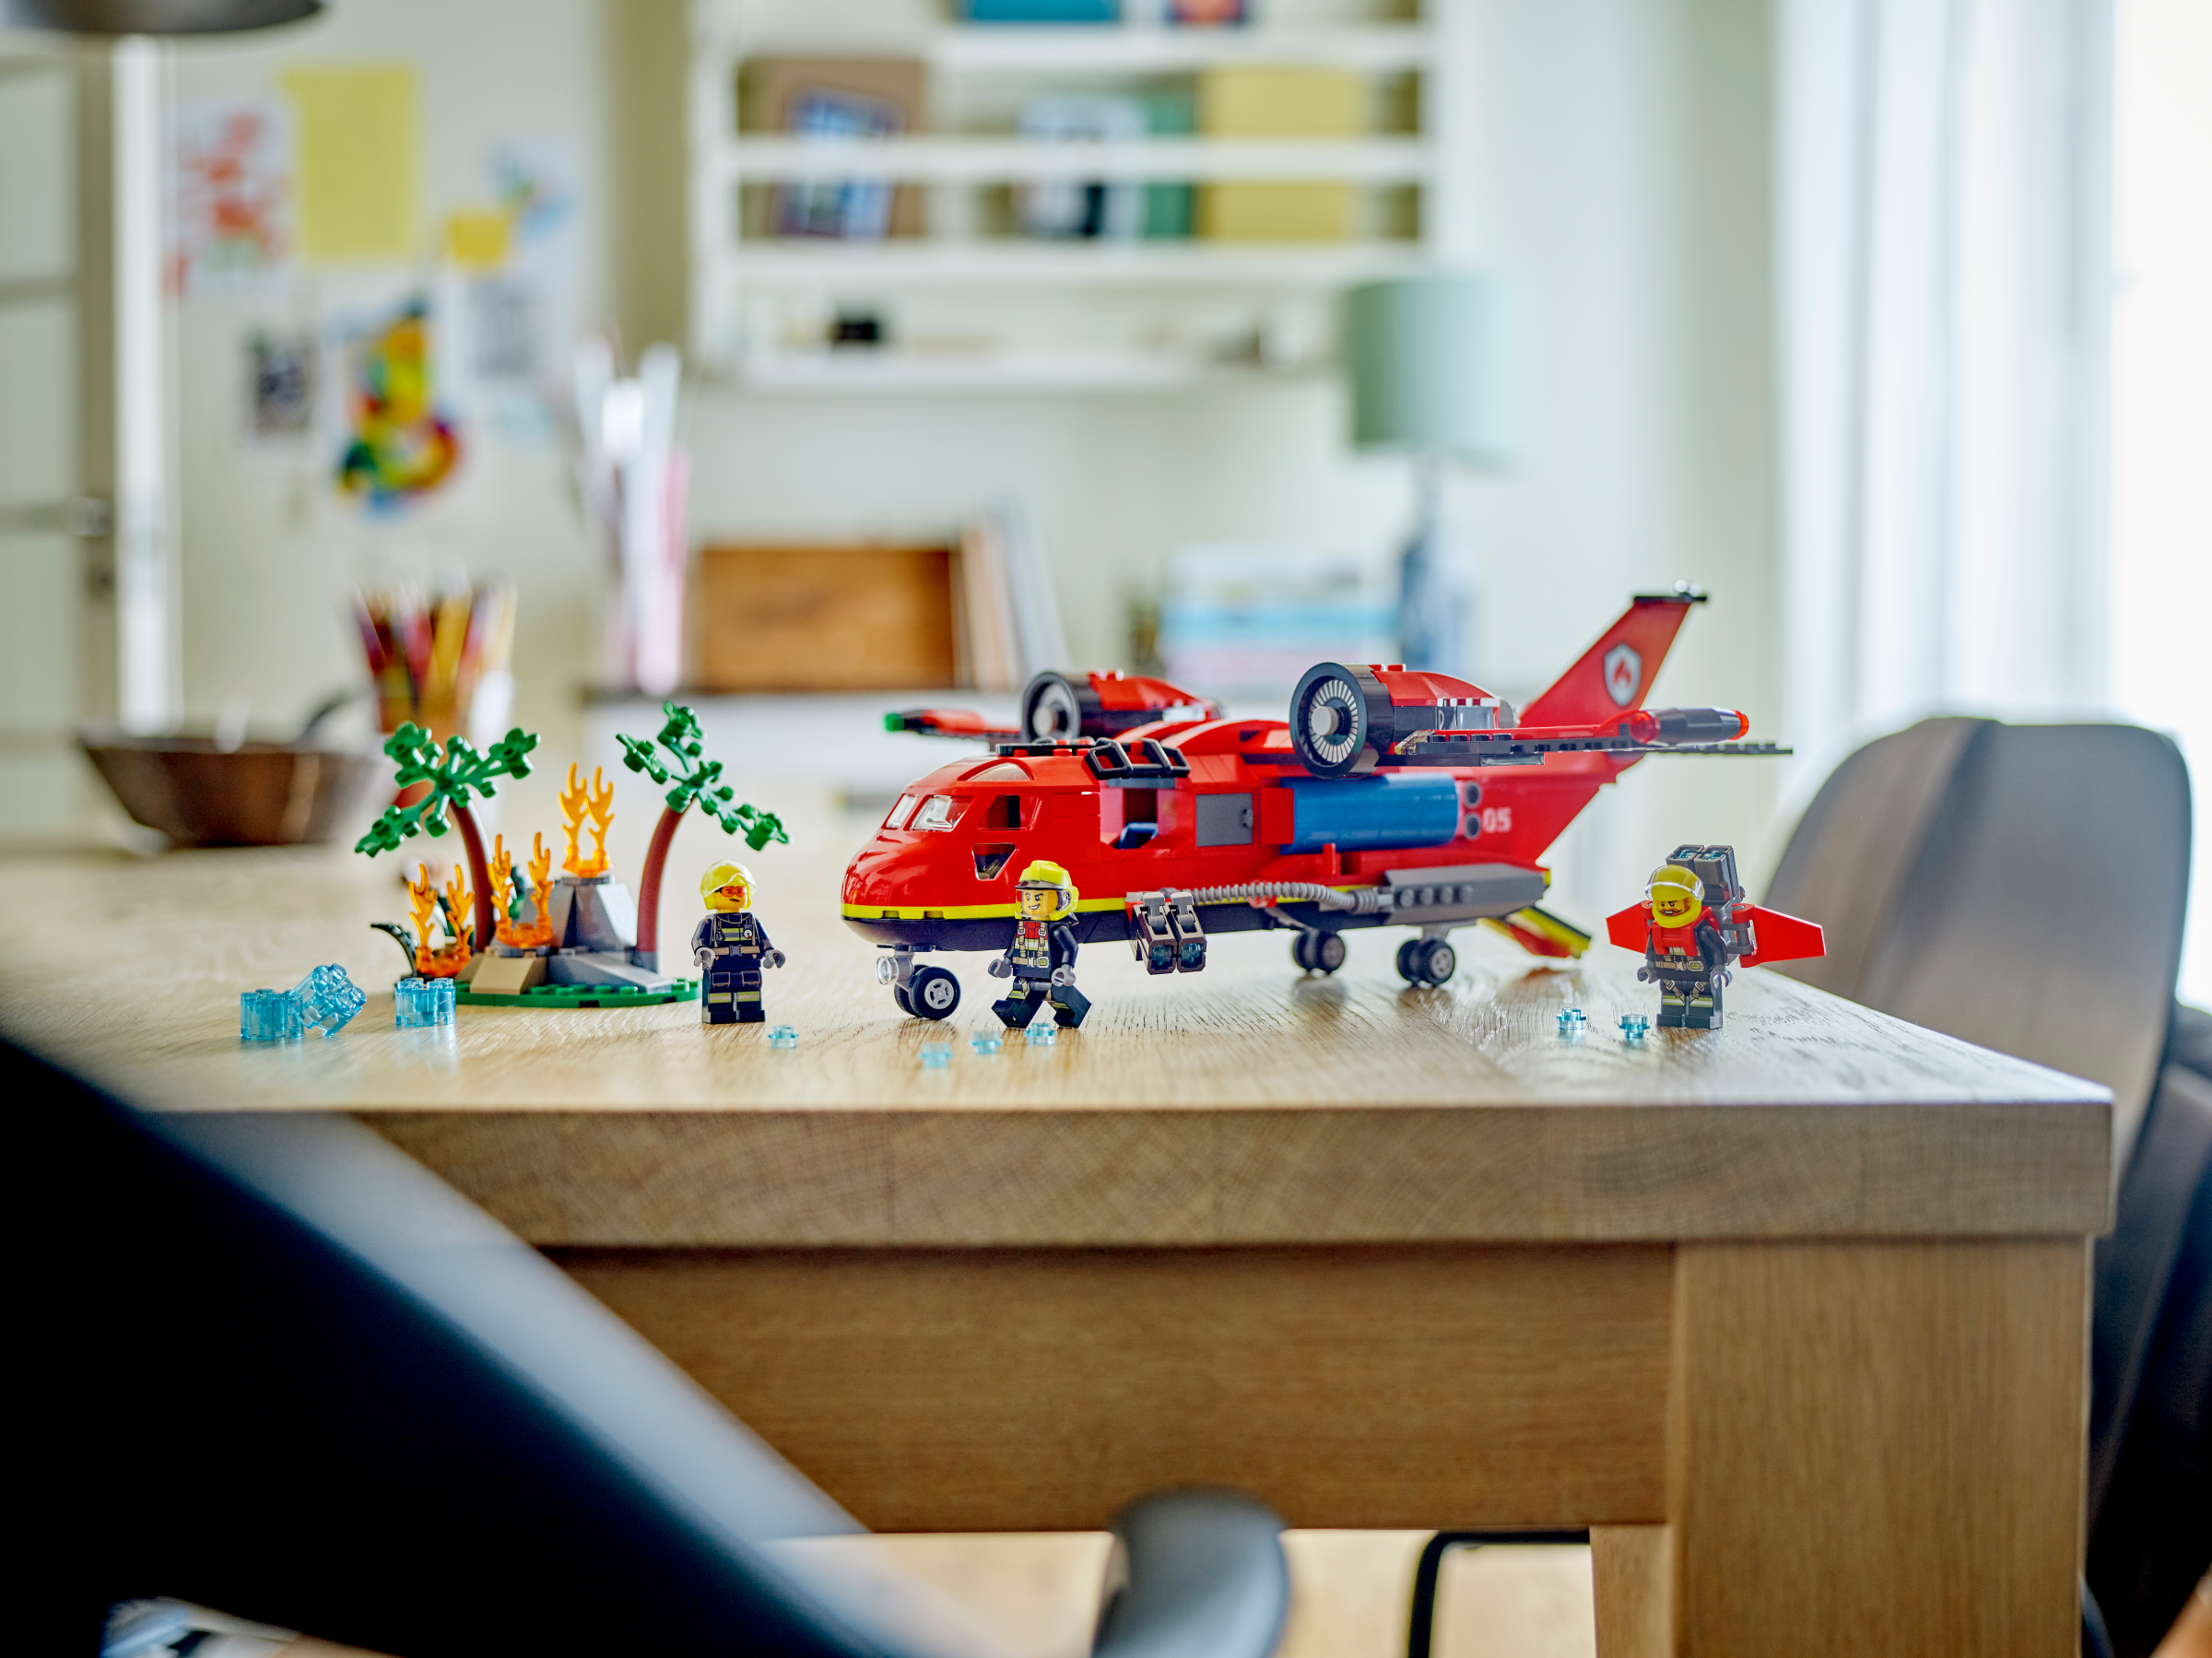 Lego 60413 Avión de Rescate de Bomberos